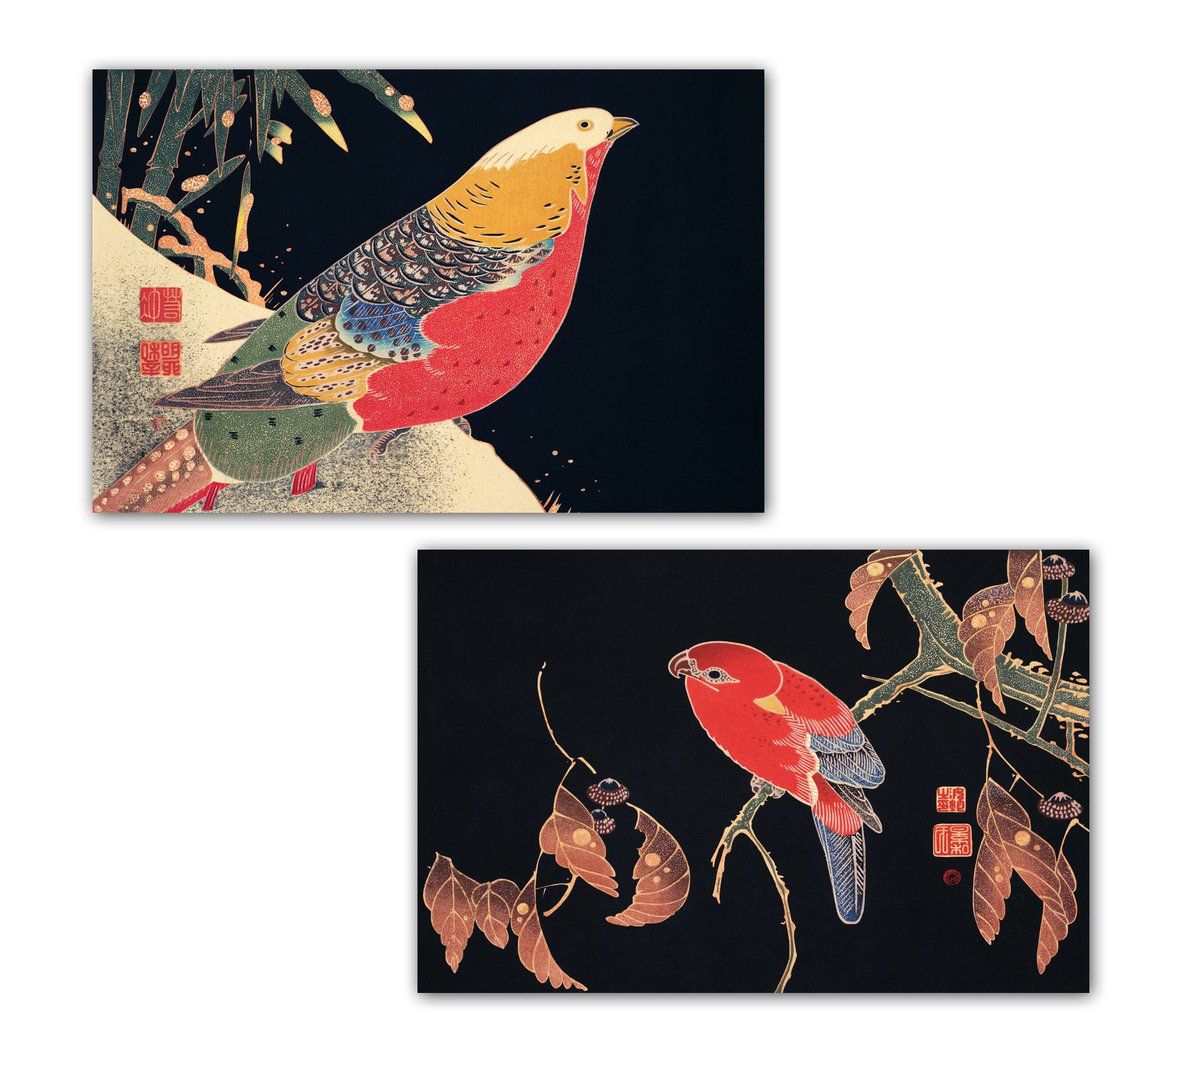 Japan Art Ito Jakuchu bird art print Japanese woodblock reproduction Red Parrot Print wall art Vintage bird painting print etsy.me/3TebnEE #unframed #bedroom #animal #horizontal #artreproduction #japaneseart #japanesebird #itojakuchu #japanesedecor